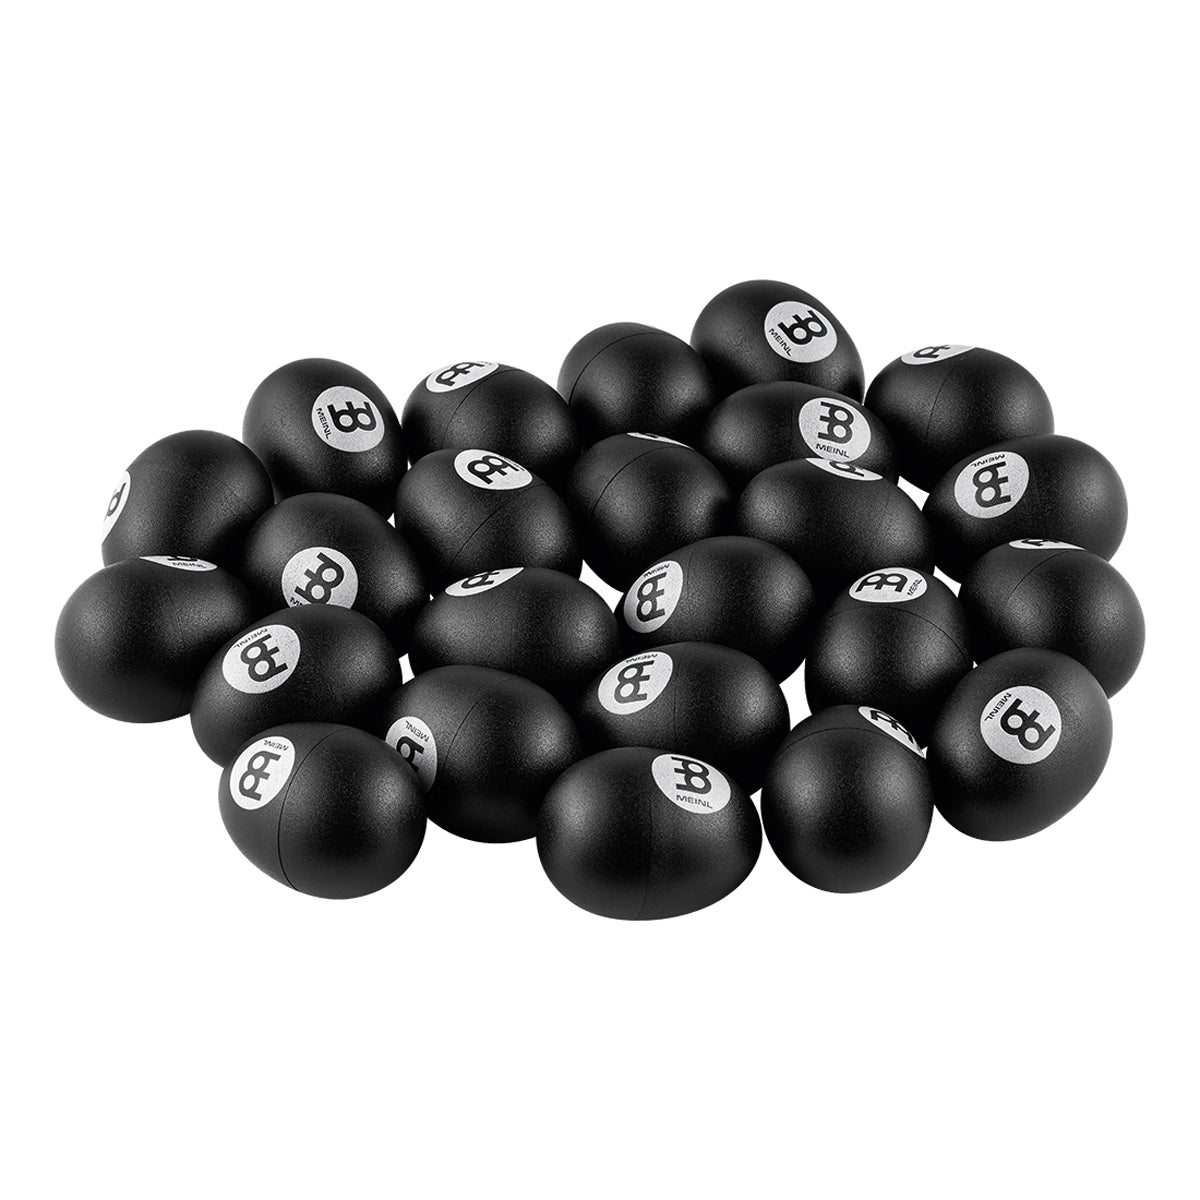 Meinl Plastic Egg Shakers Assortment - Black (Set of 24)